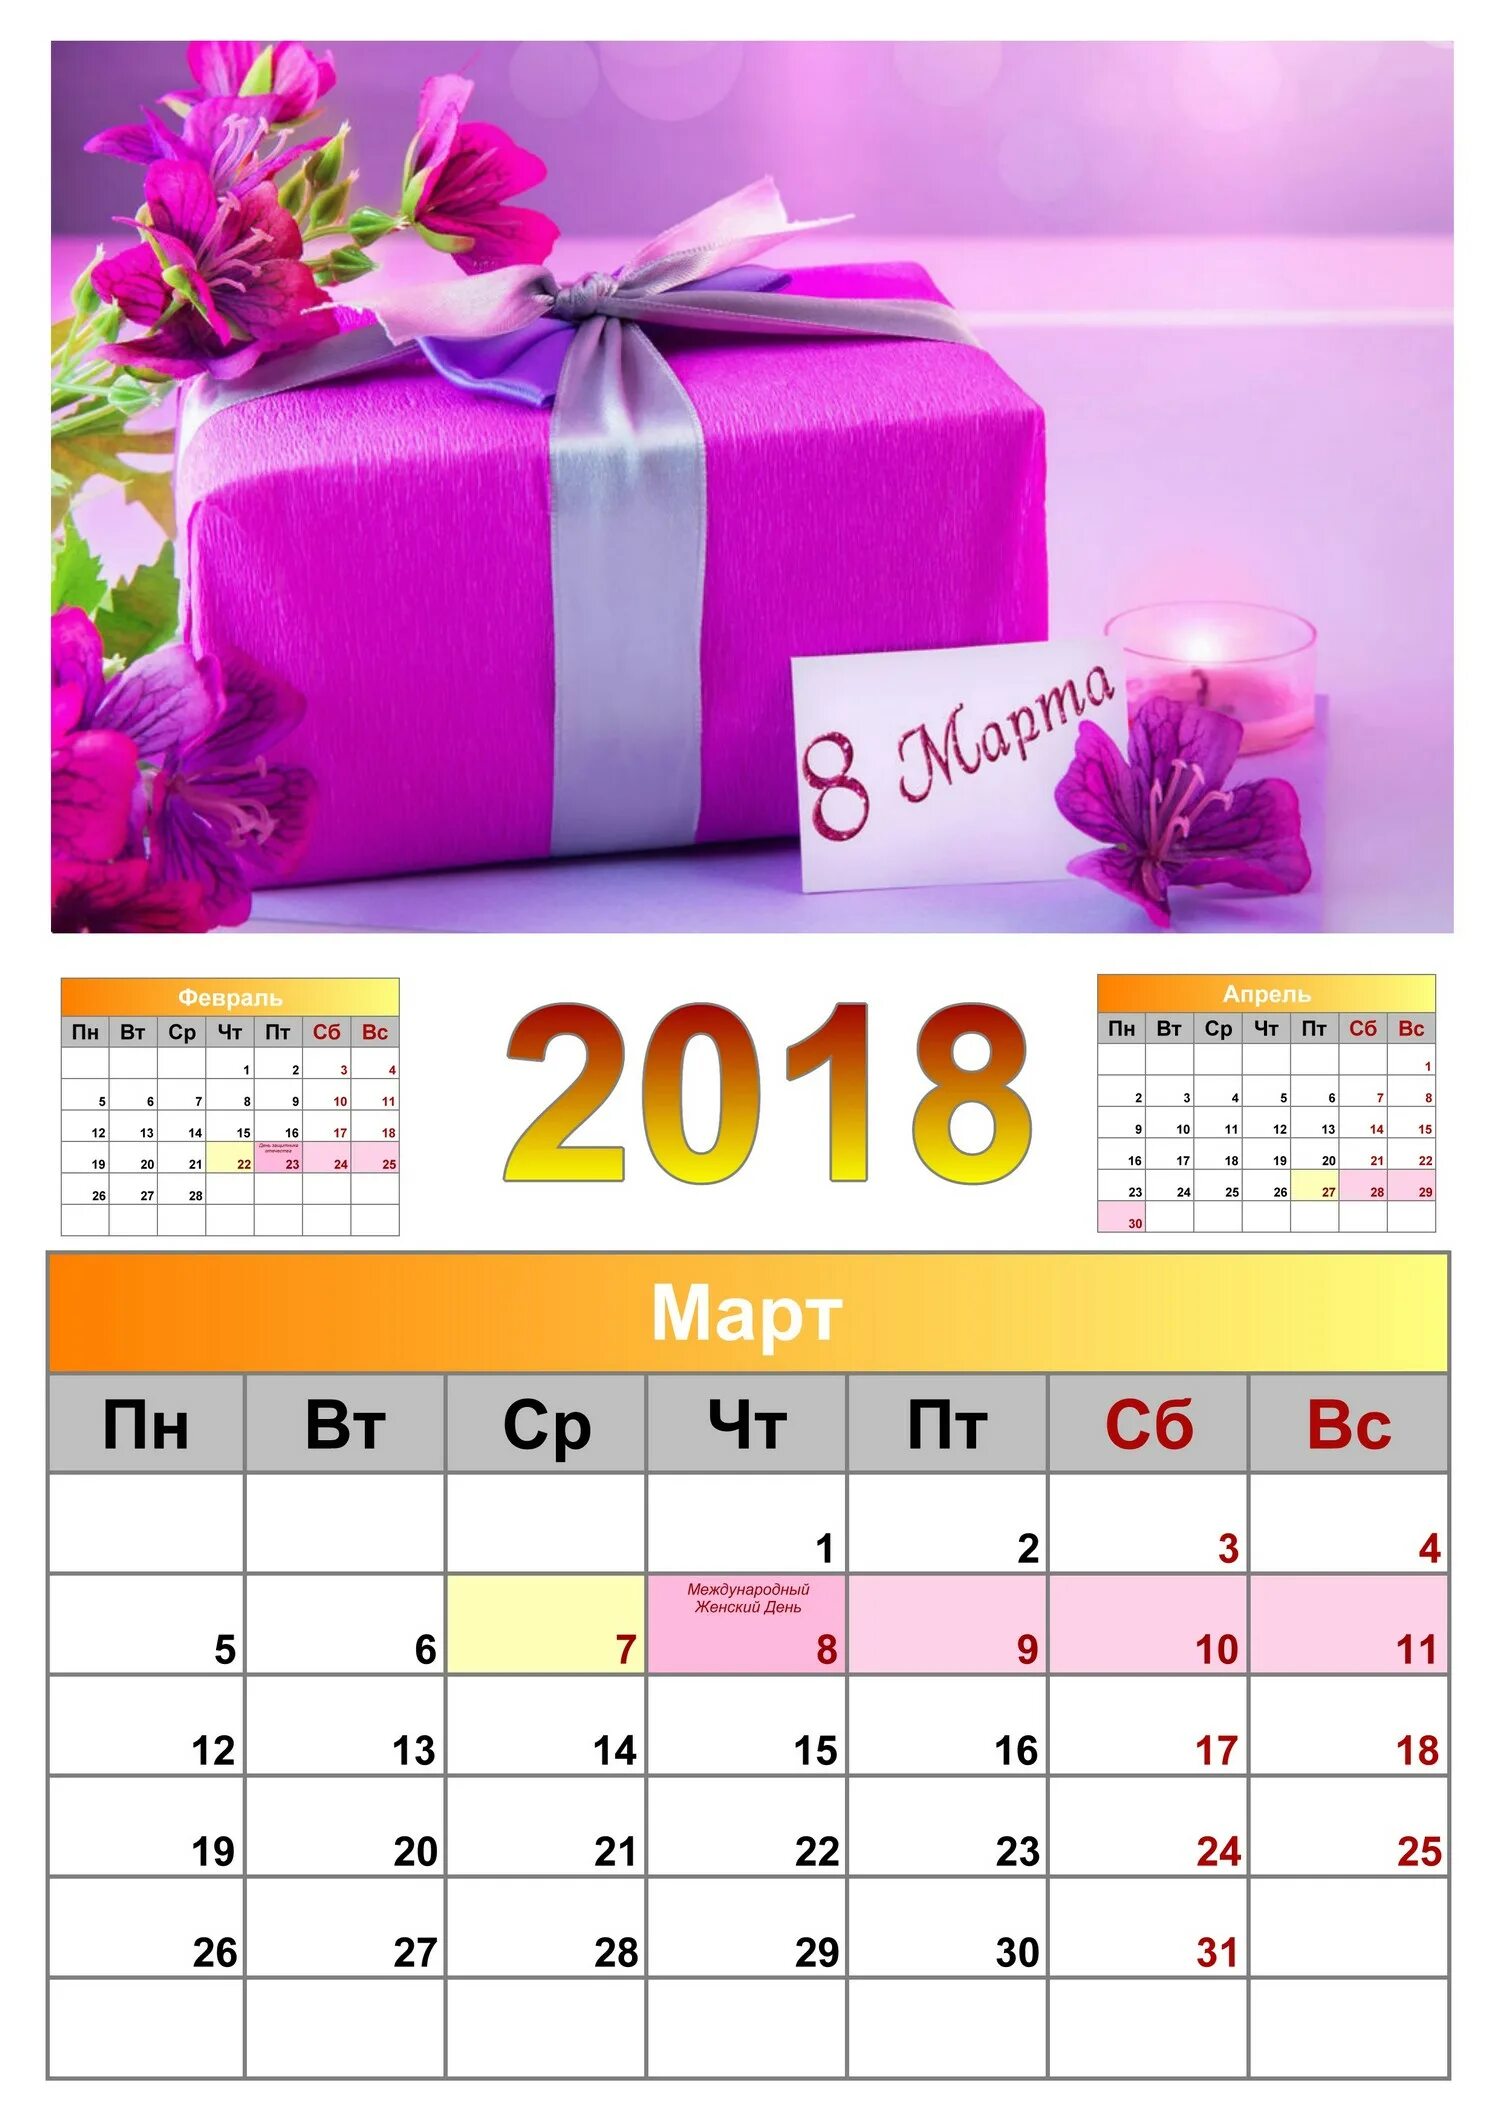 Изменения март 2018. 8 Mart Calendar. Март 2018 года.